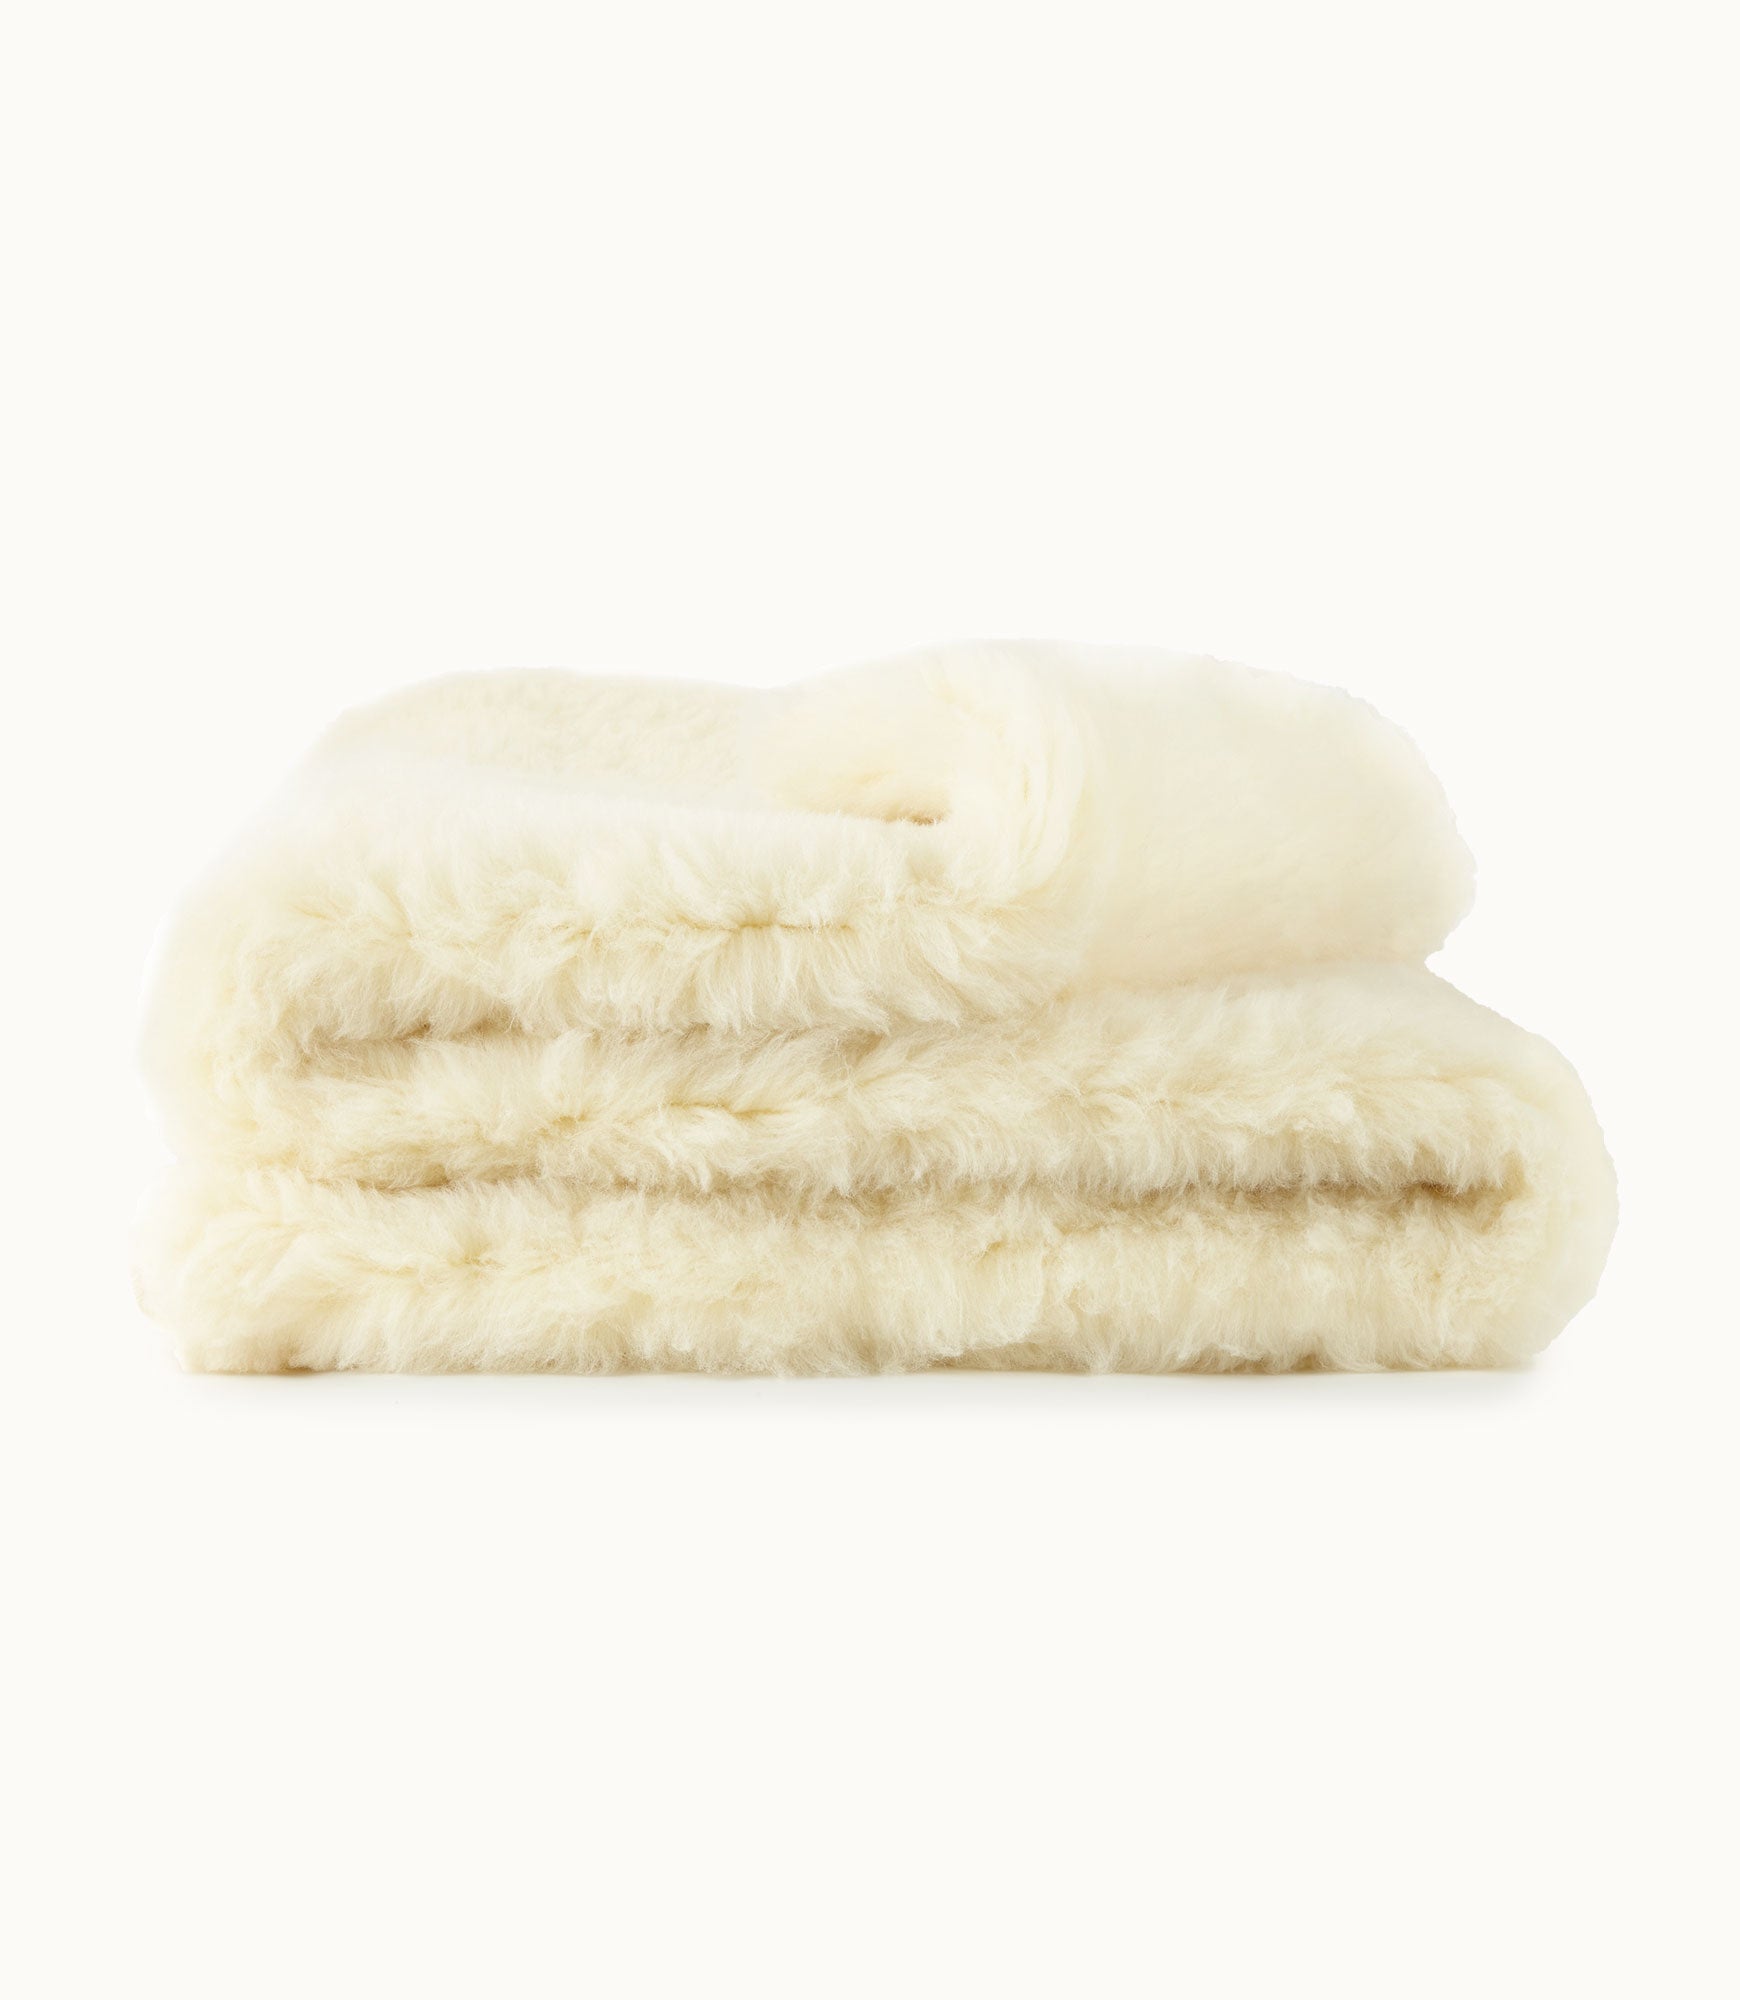 Wool Mattress Topper | Highest Quality Guaranteed | CuddleEwe™